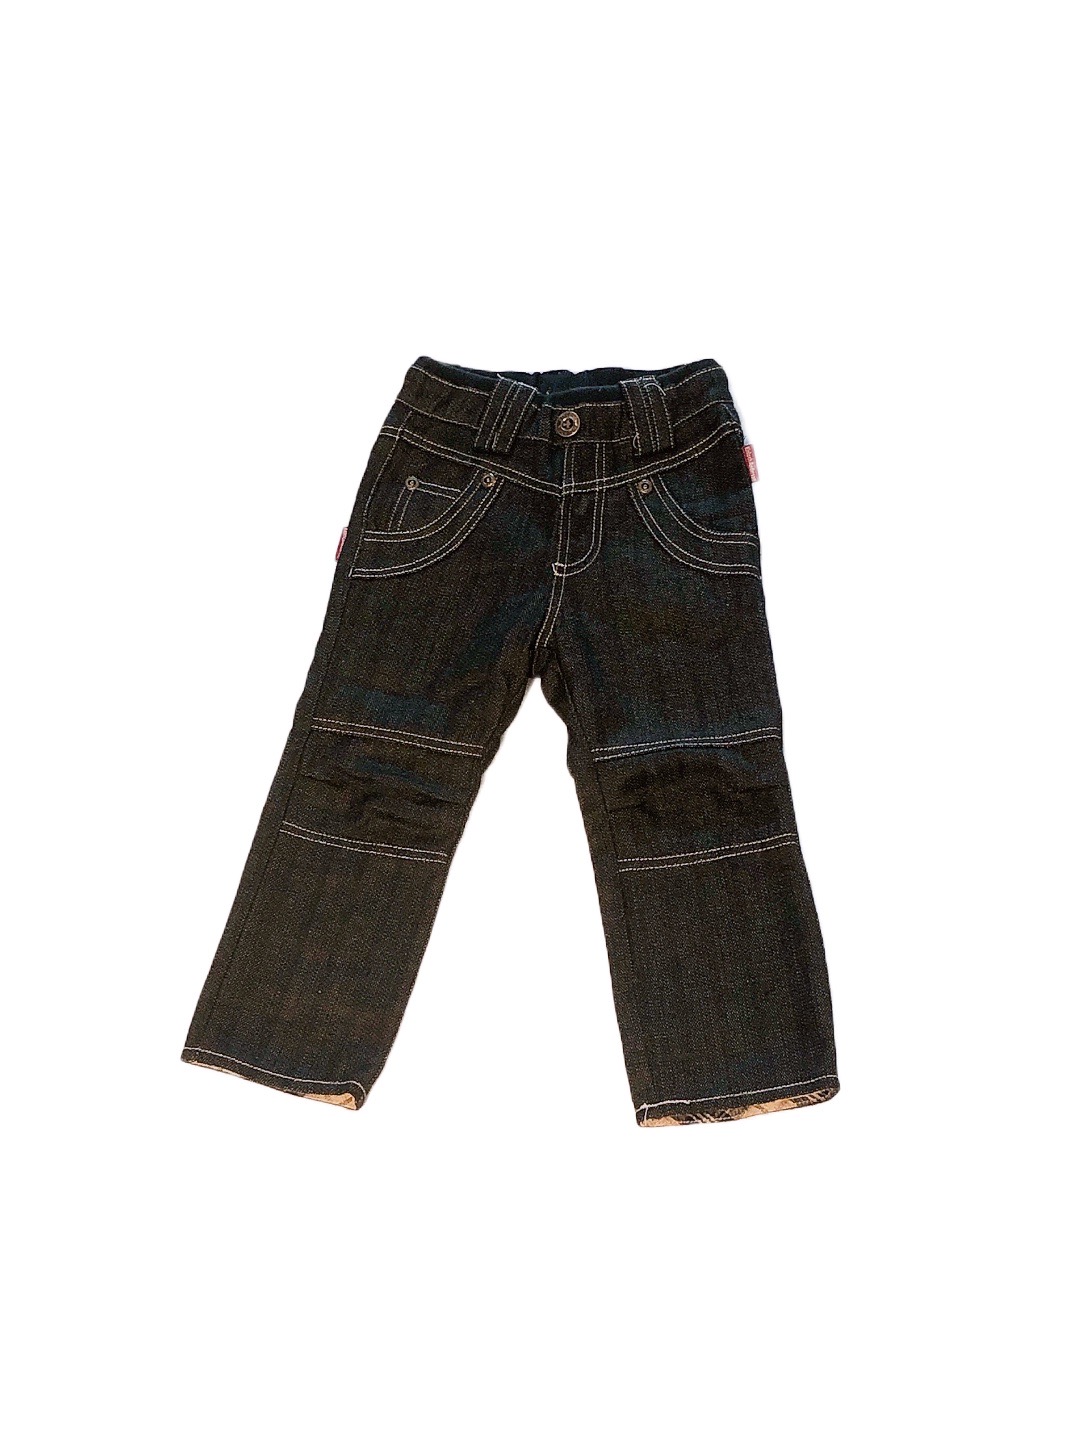 《Kinloch Anderson(金安德森)》牛仔帥氣男童長褲(較厚牛仔布)(6m-12m)
NT$149